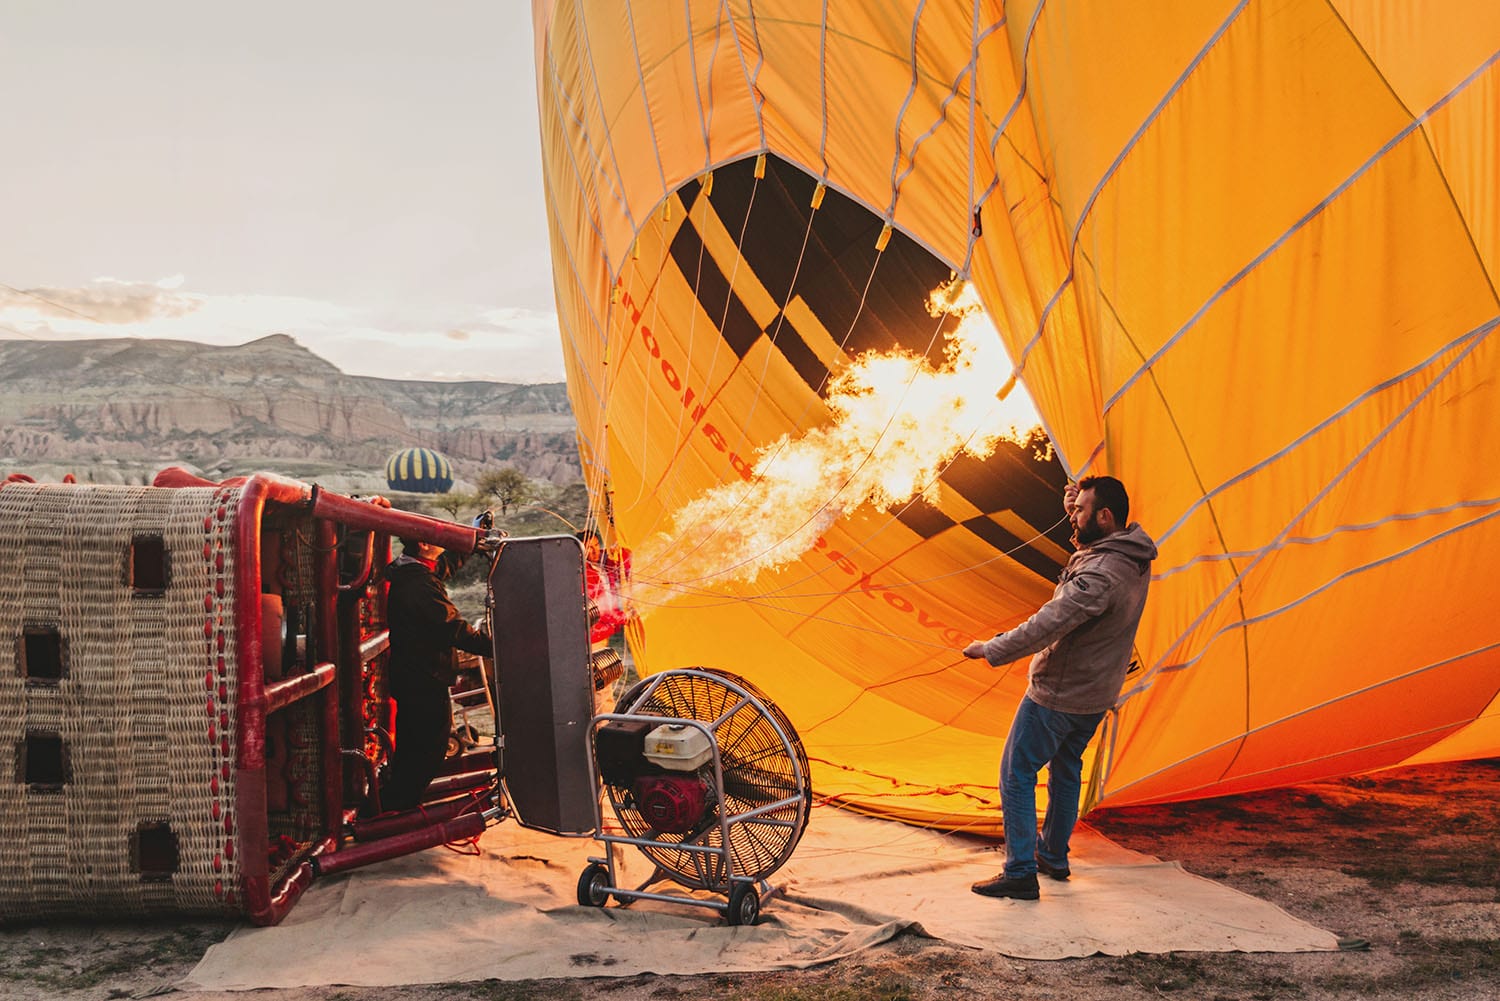 Magical: Hot air ballooning in Cappadocia, Turkey